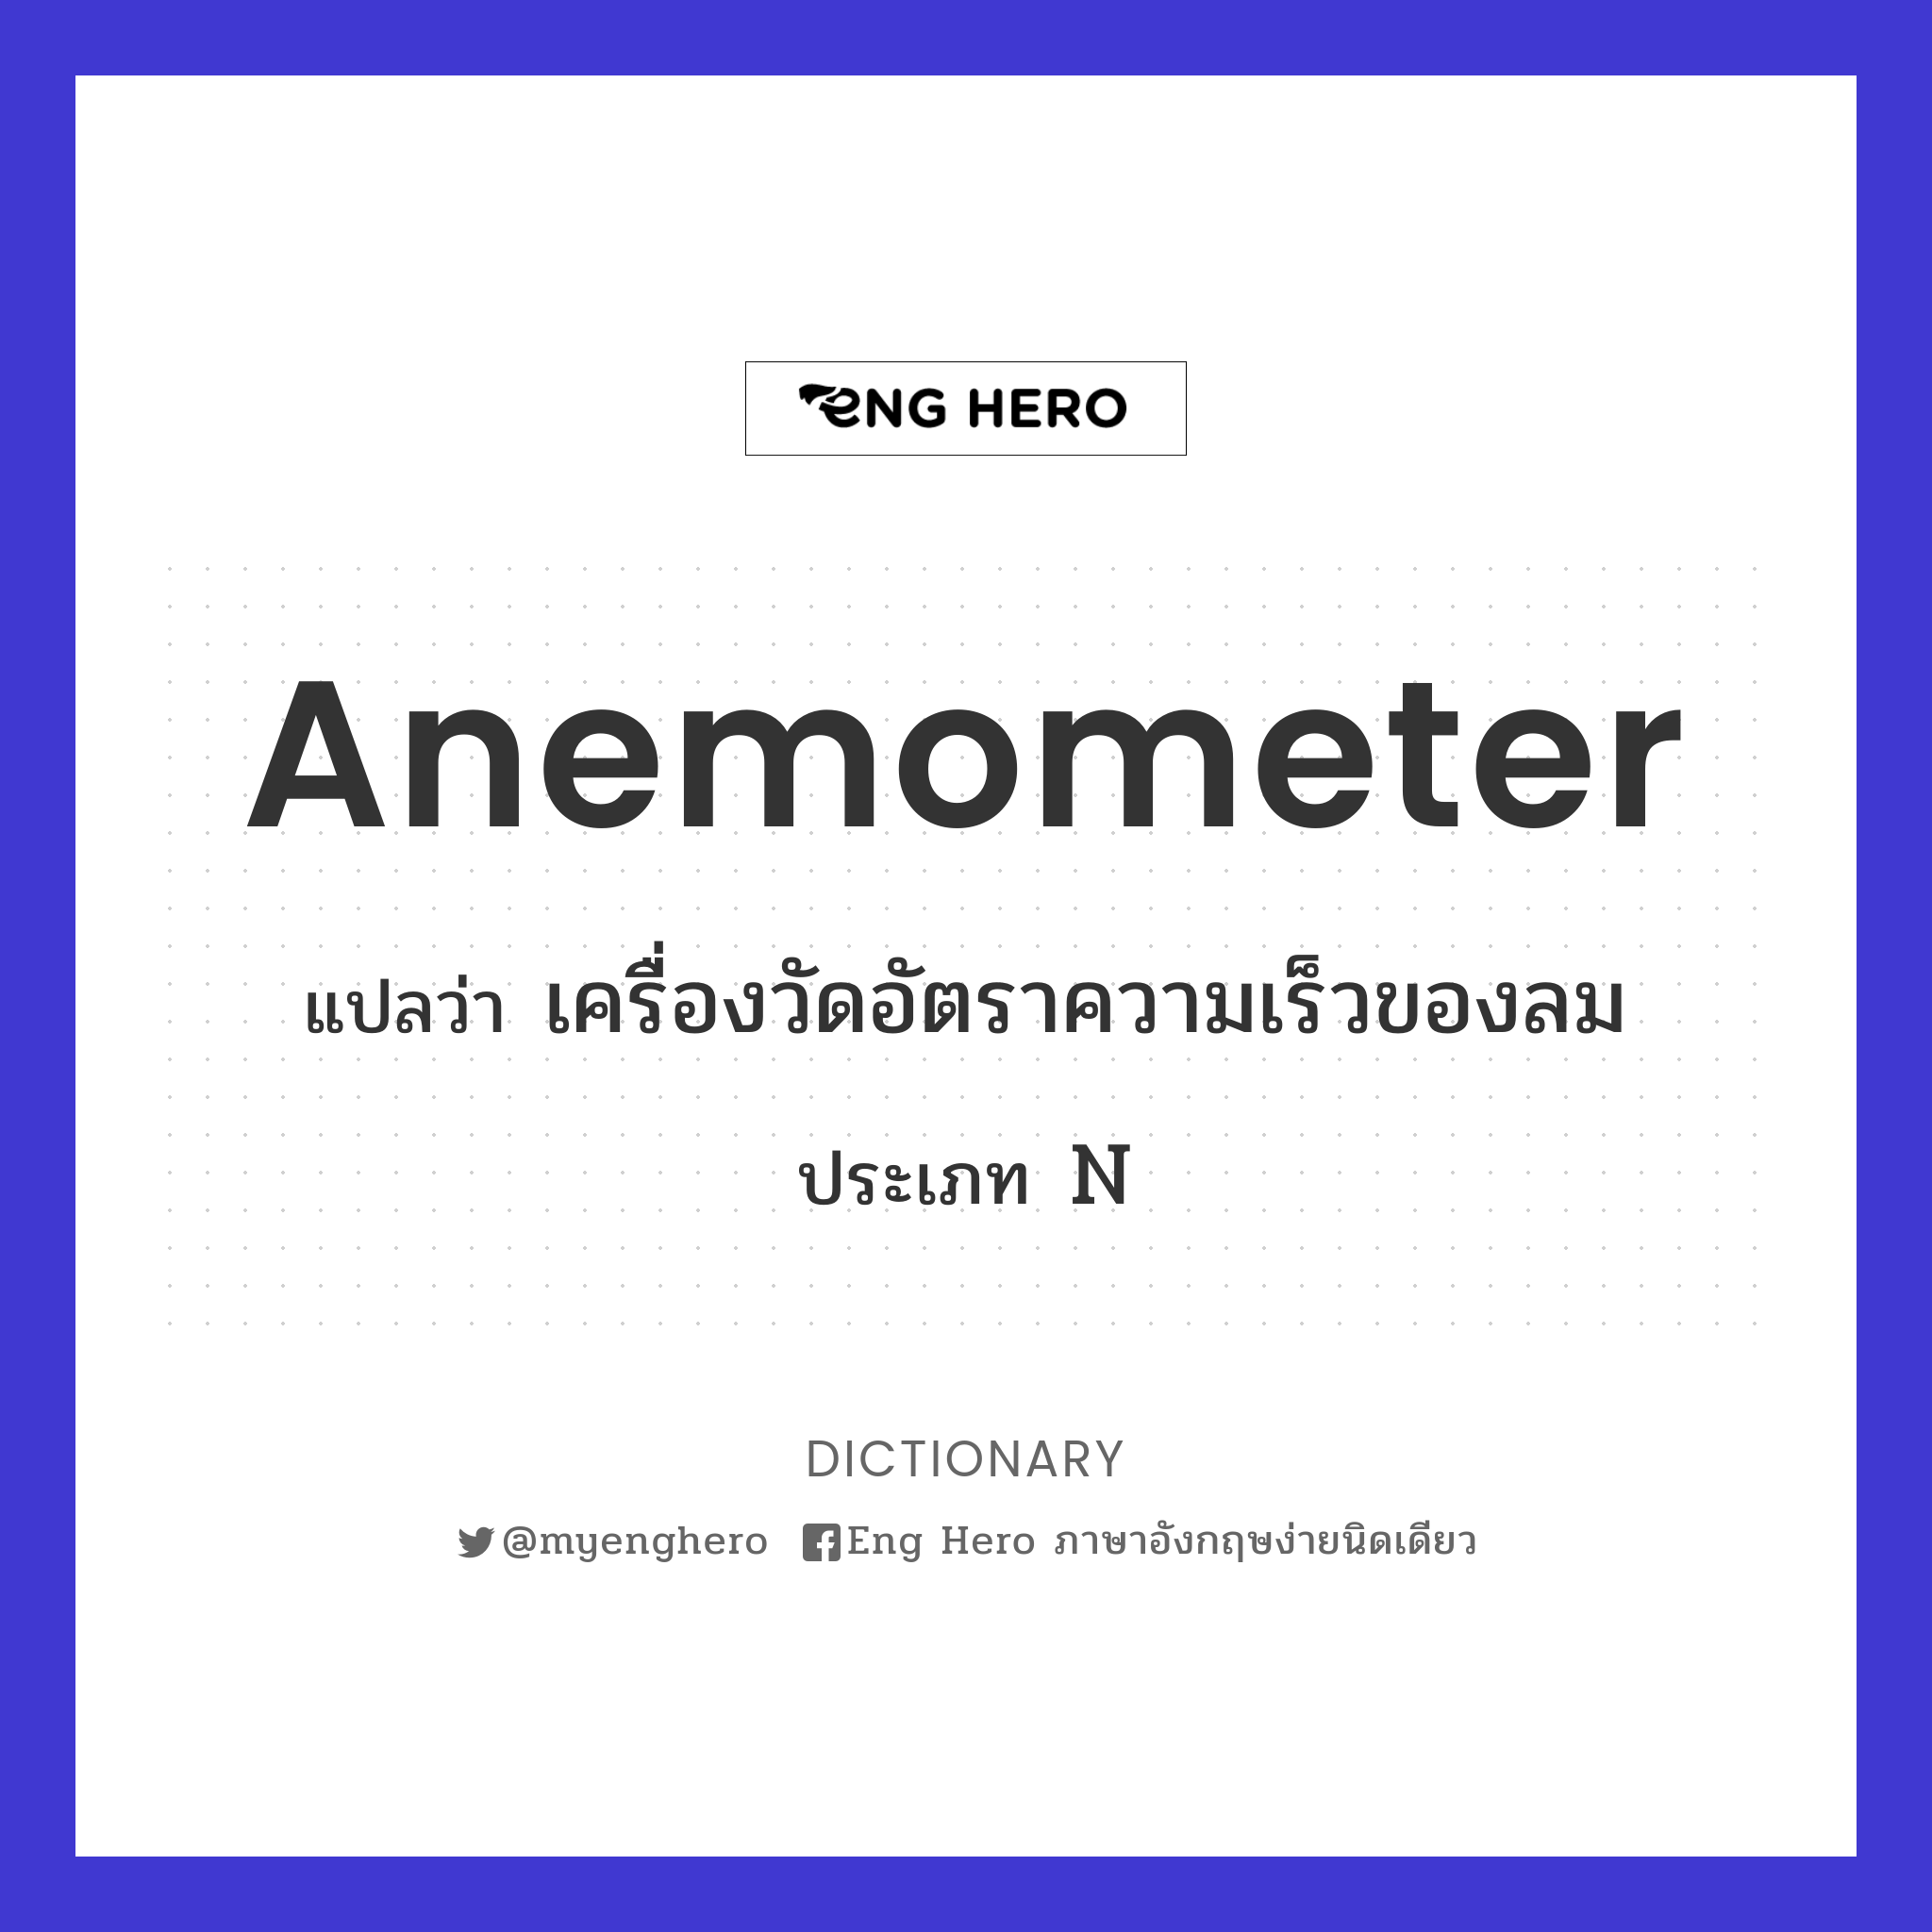 anemometer